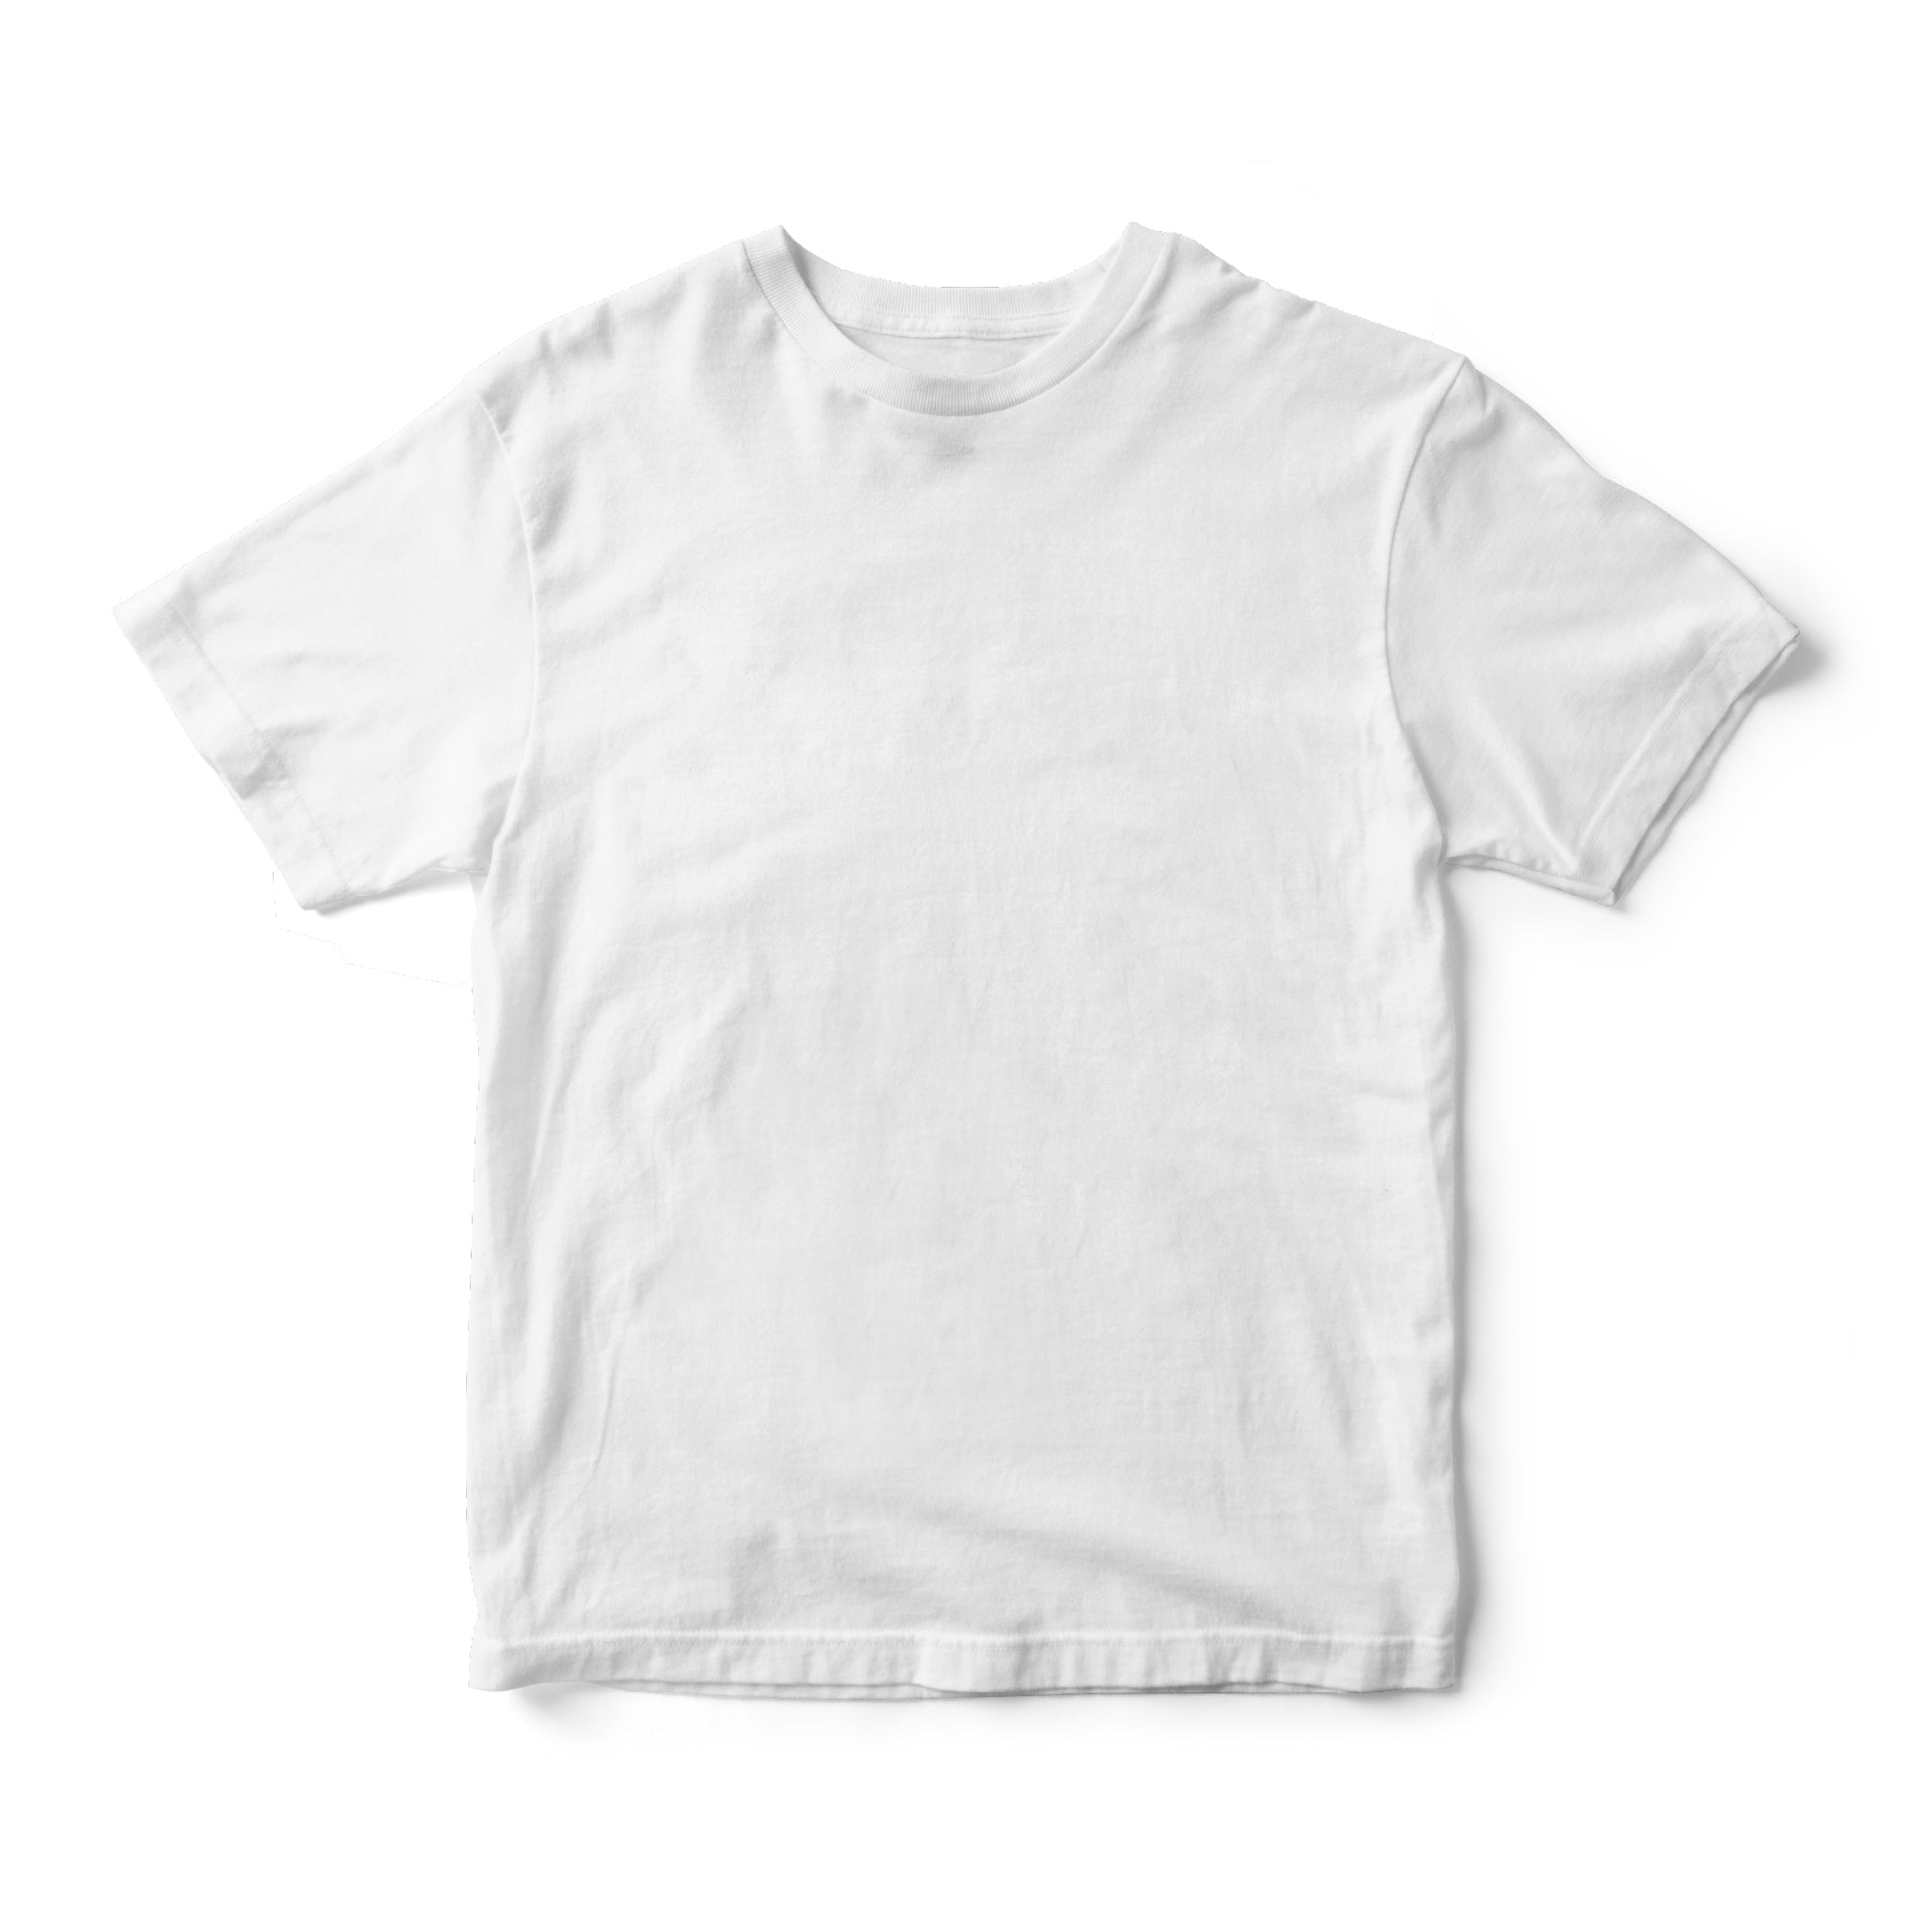 Instee Blank T-shirt Unisex 100% Cotton